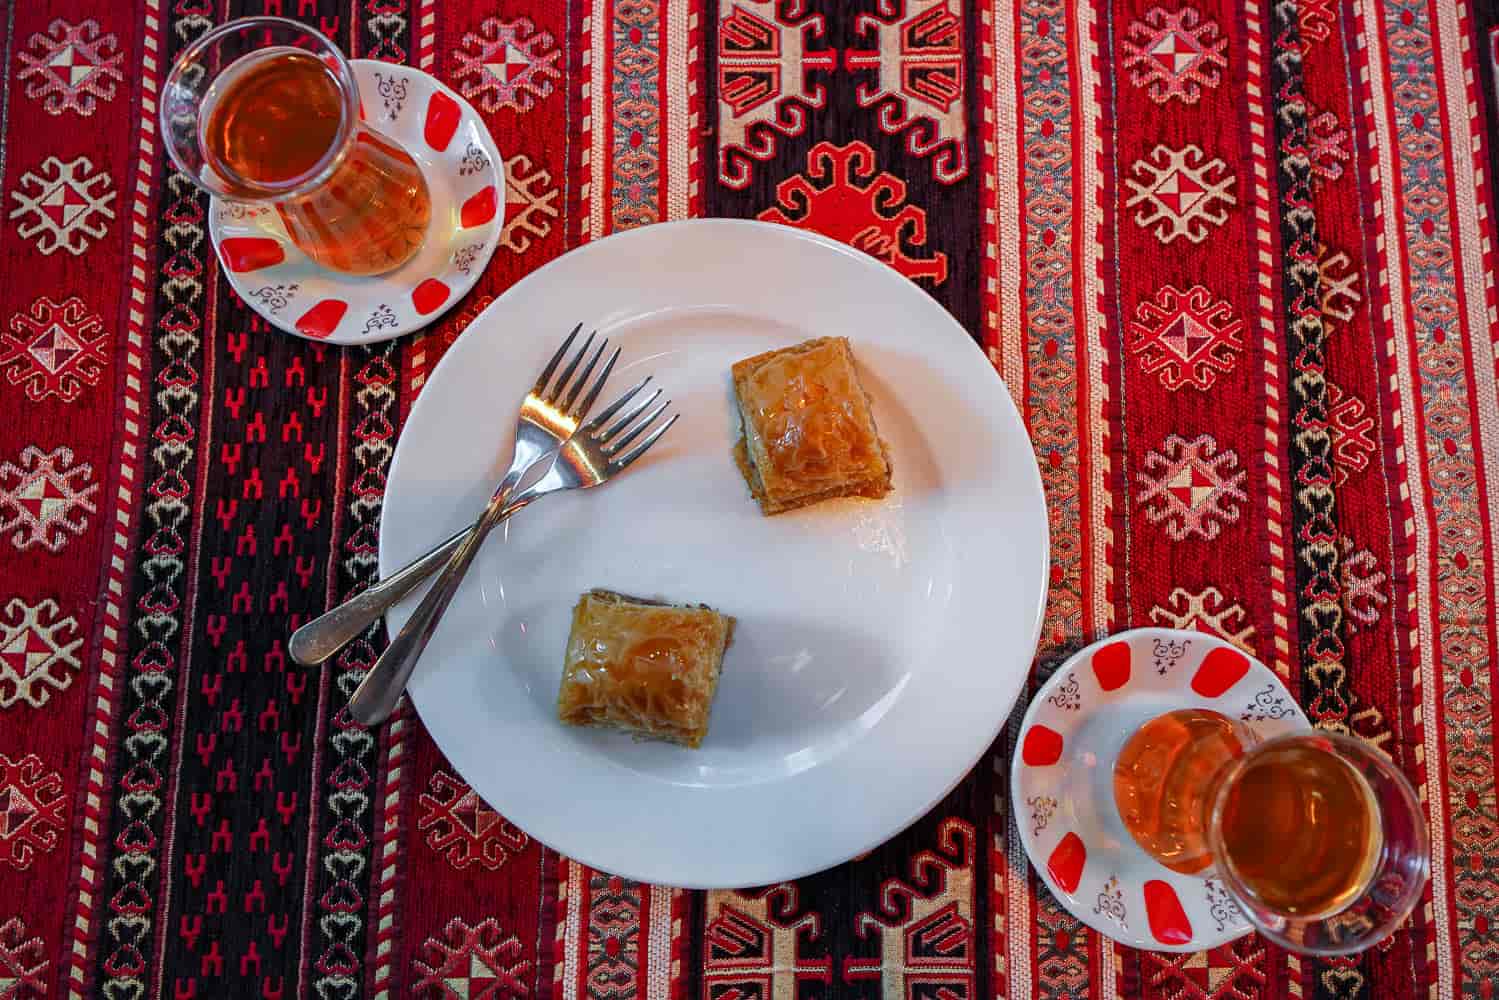 Two baklava on plate with Turkish apple tea